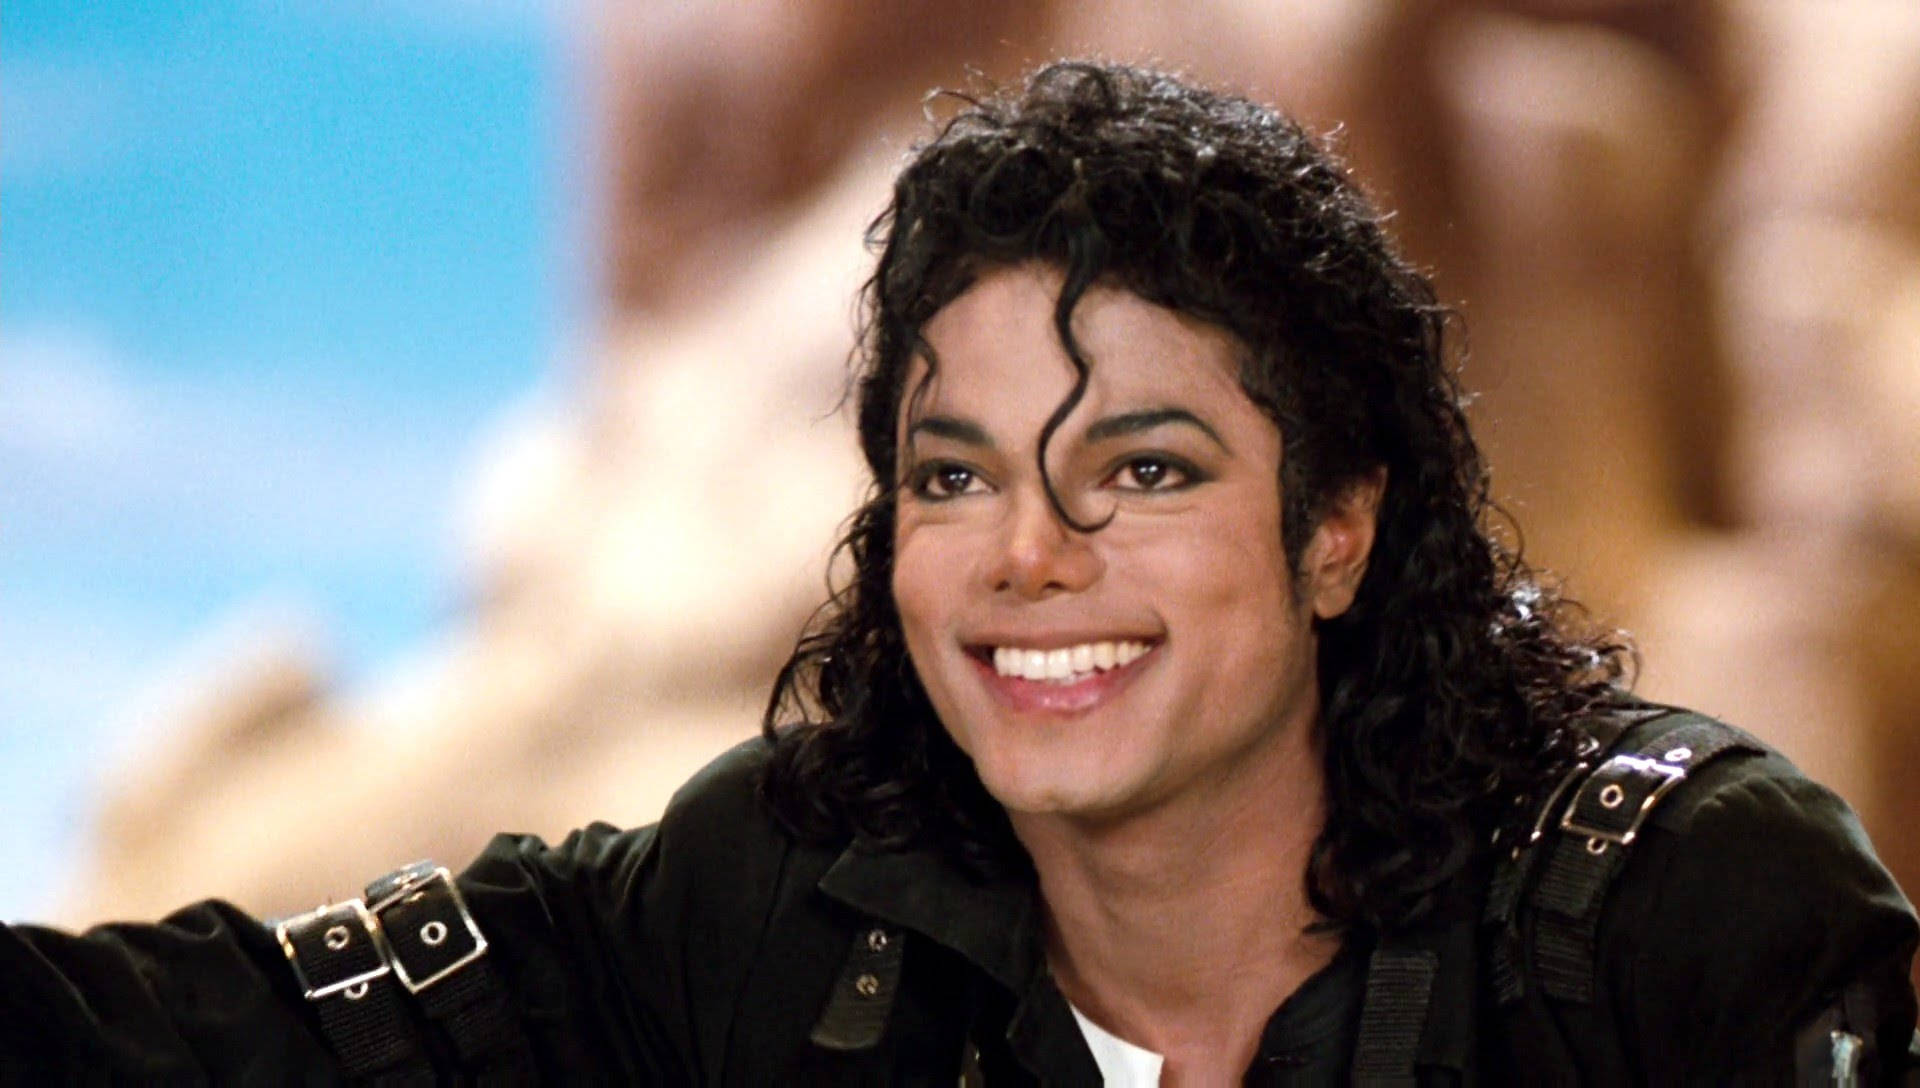 Michael Jackson Smile Wallpaper